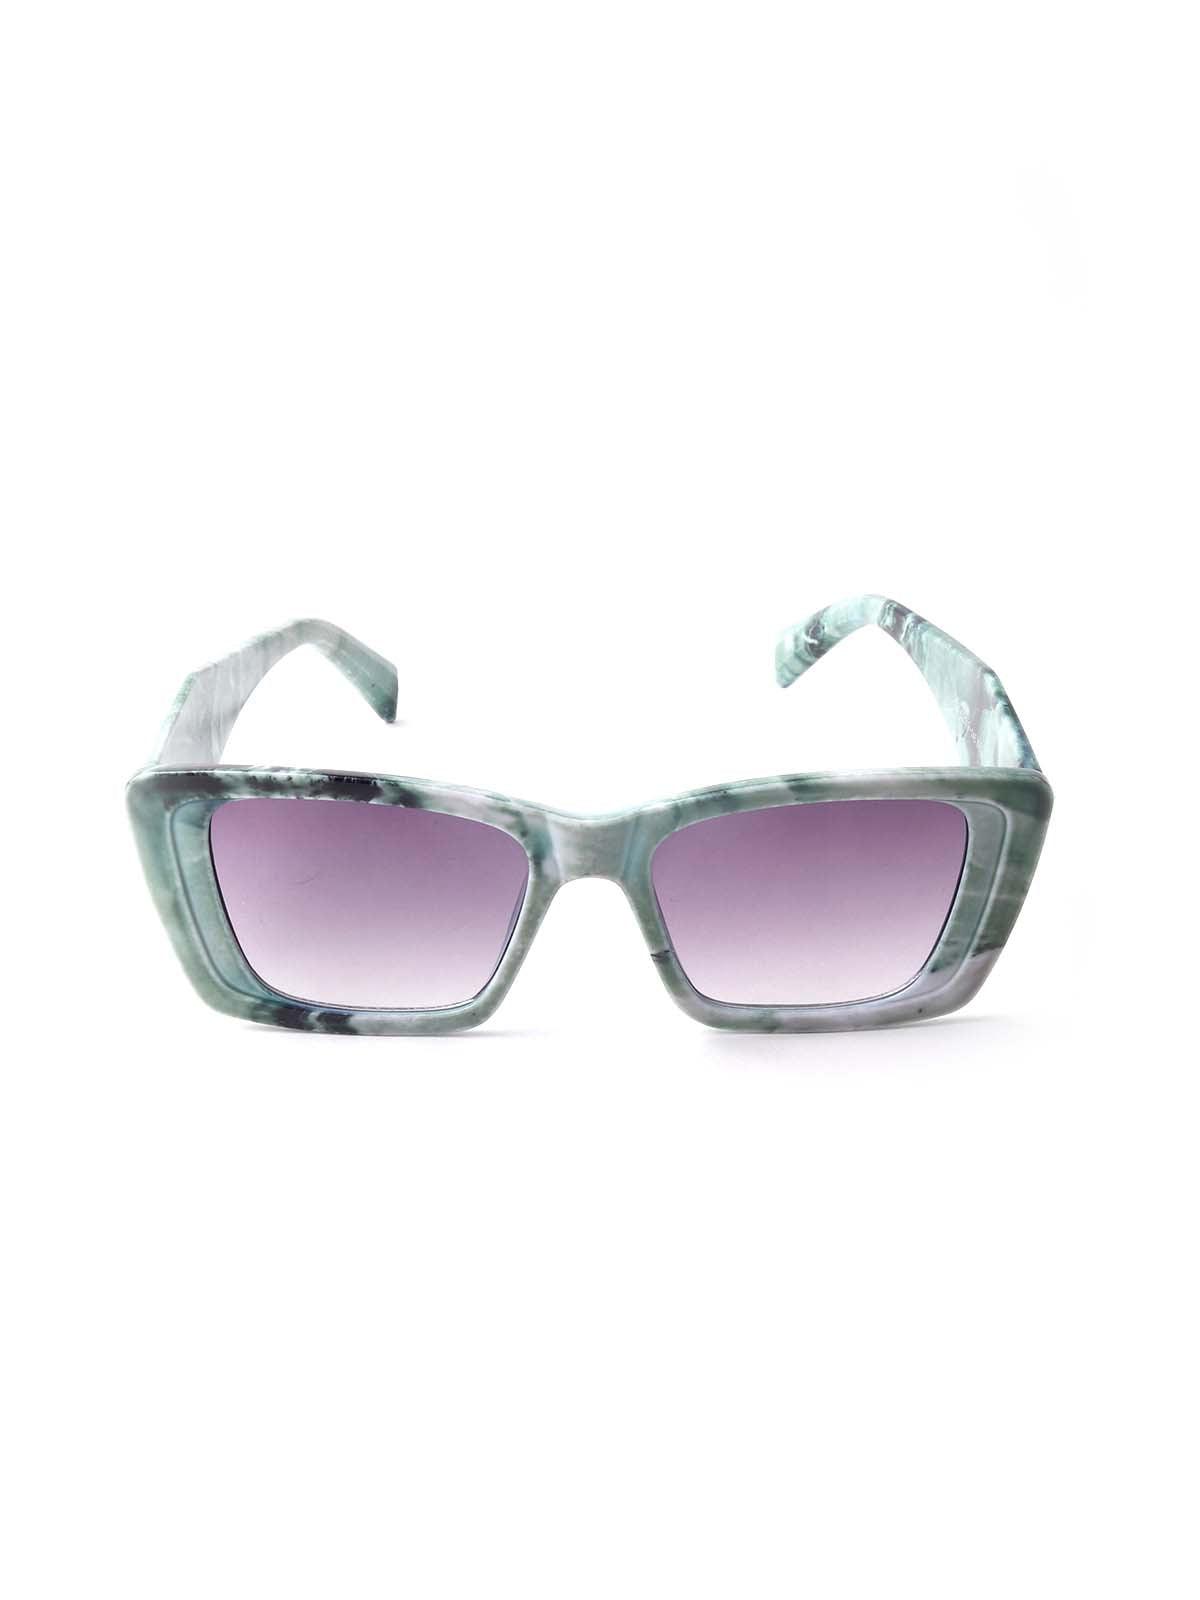 Odette Super Beachy Green Printed Sunglasses For Women